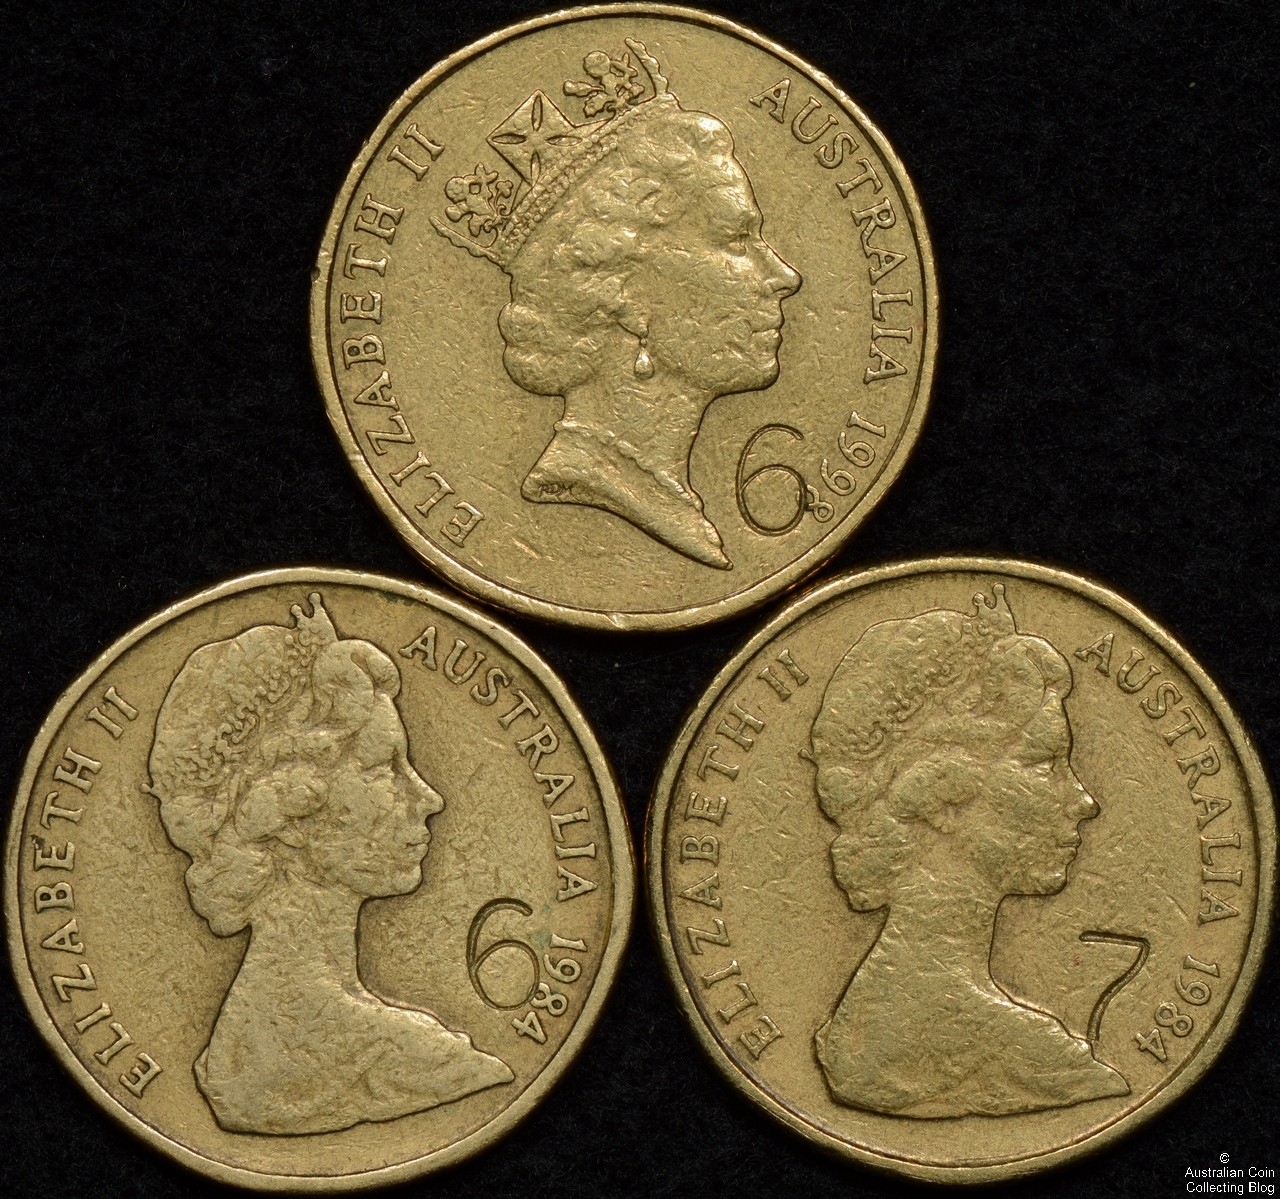 Rare Australian 1 Dollar Coin Values